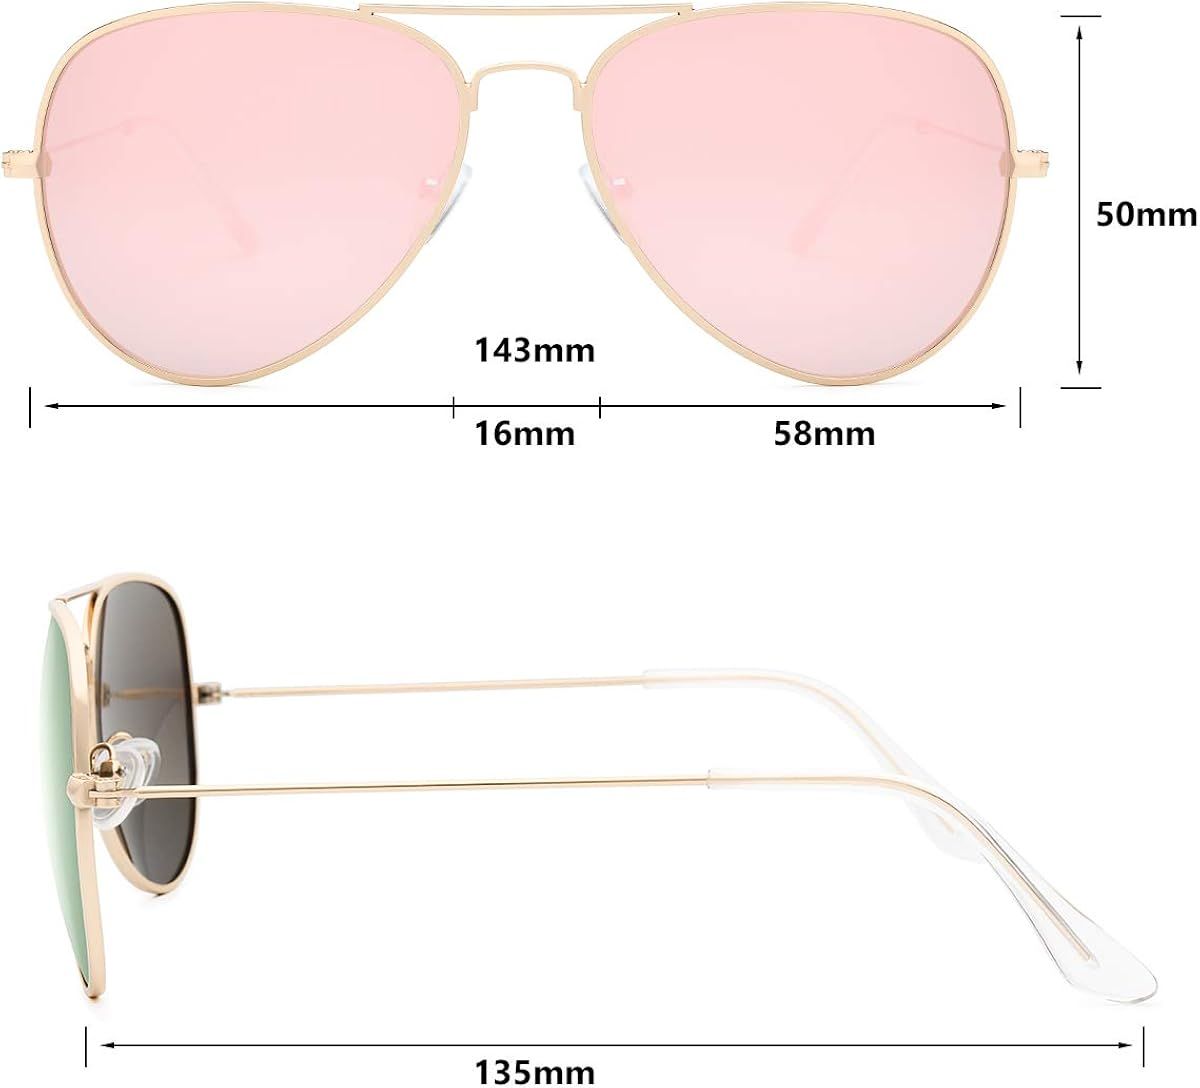 Livhò Sunglasses for Men Women Aviator Polarized Metal Mirror UV 400 Lens Protection | Amazon (US)